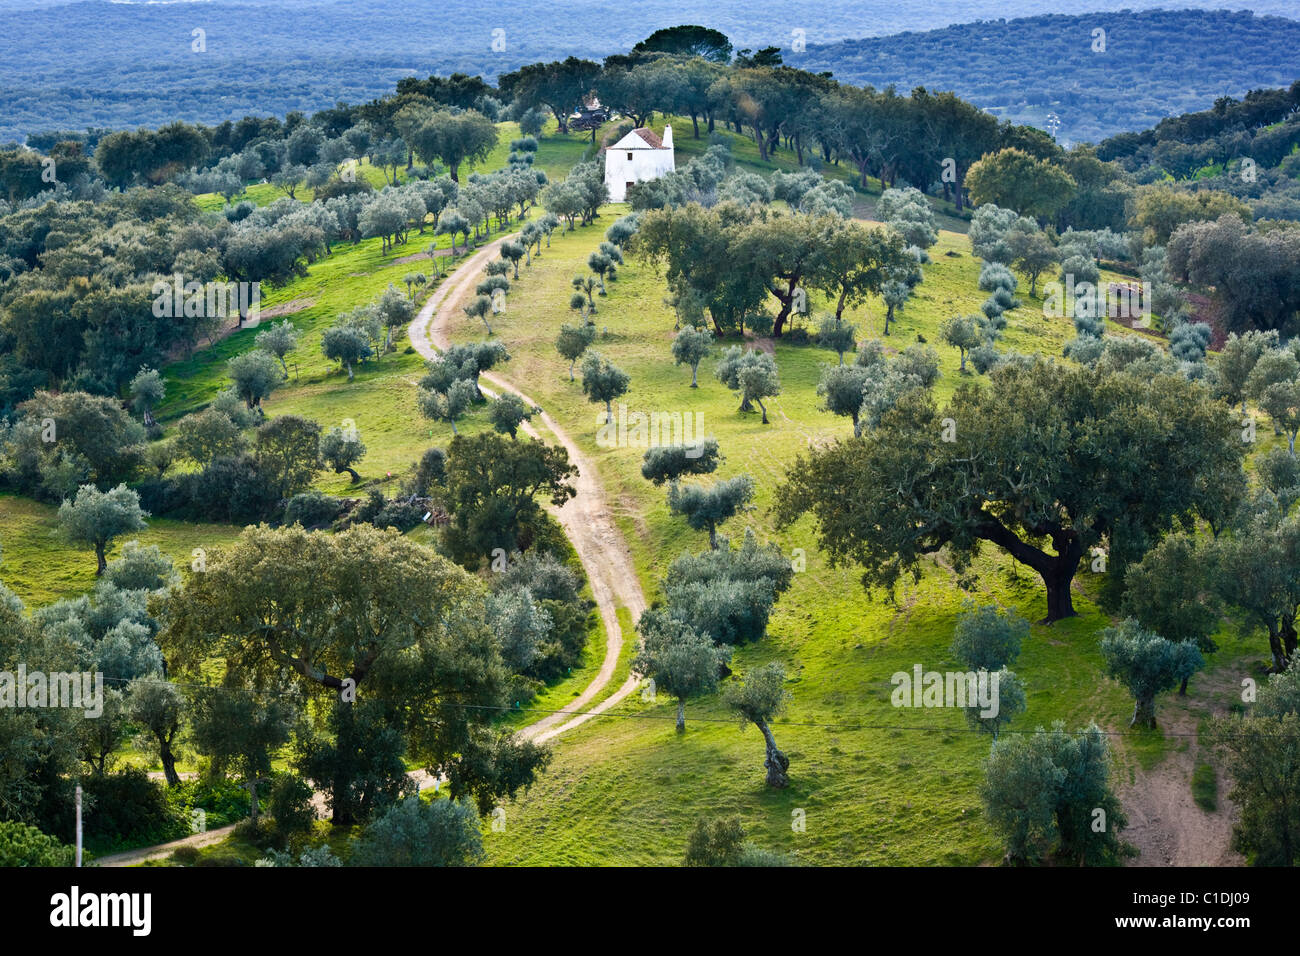 Cork and olive trees dot the Alentejo landscape near Evoramonte in Portugal Stock Photo